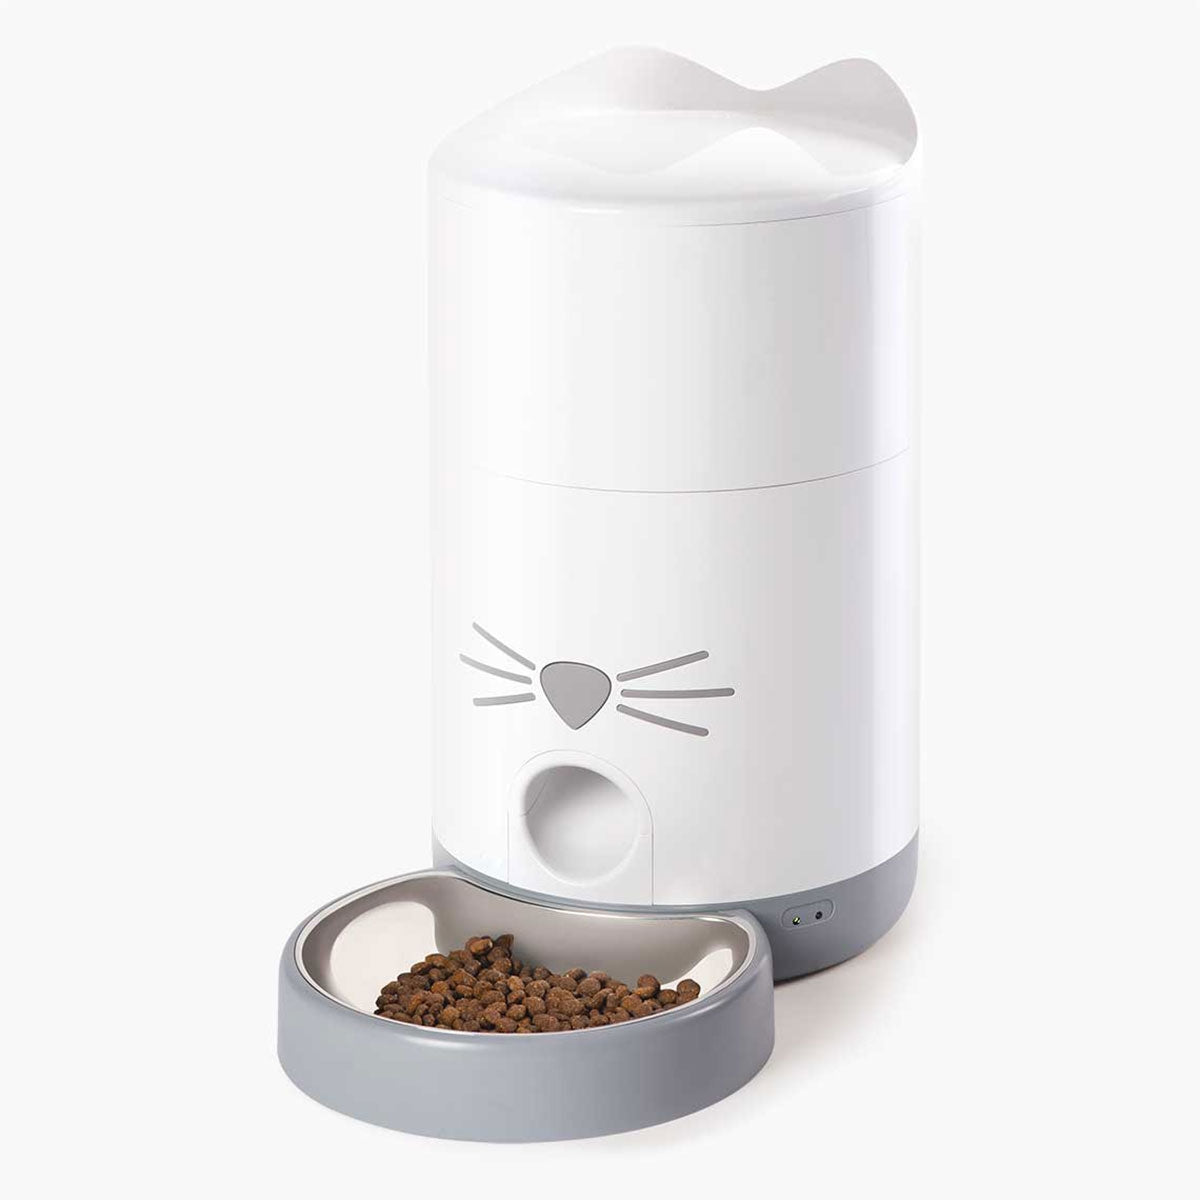 Catit Pixi Smart Feeder Remote-controlled cat food dispenser